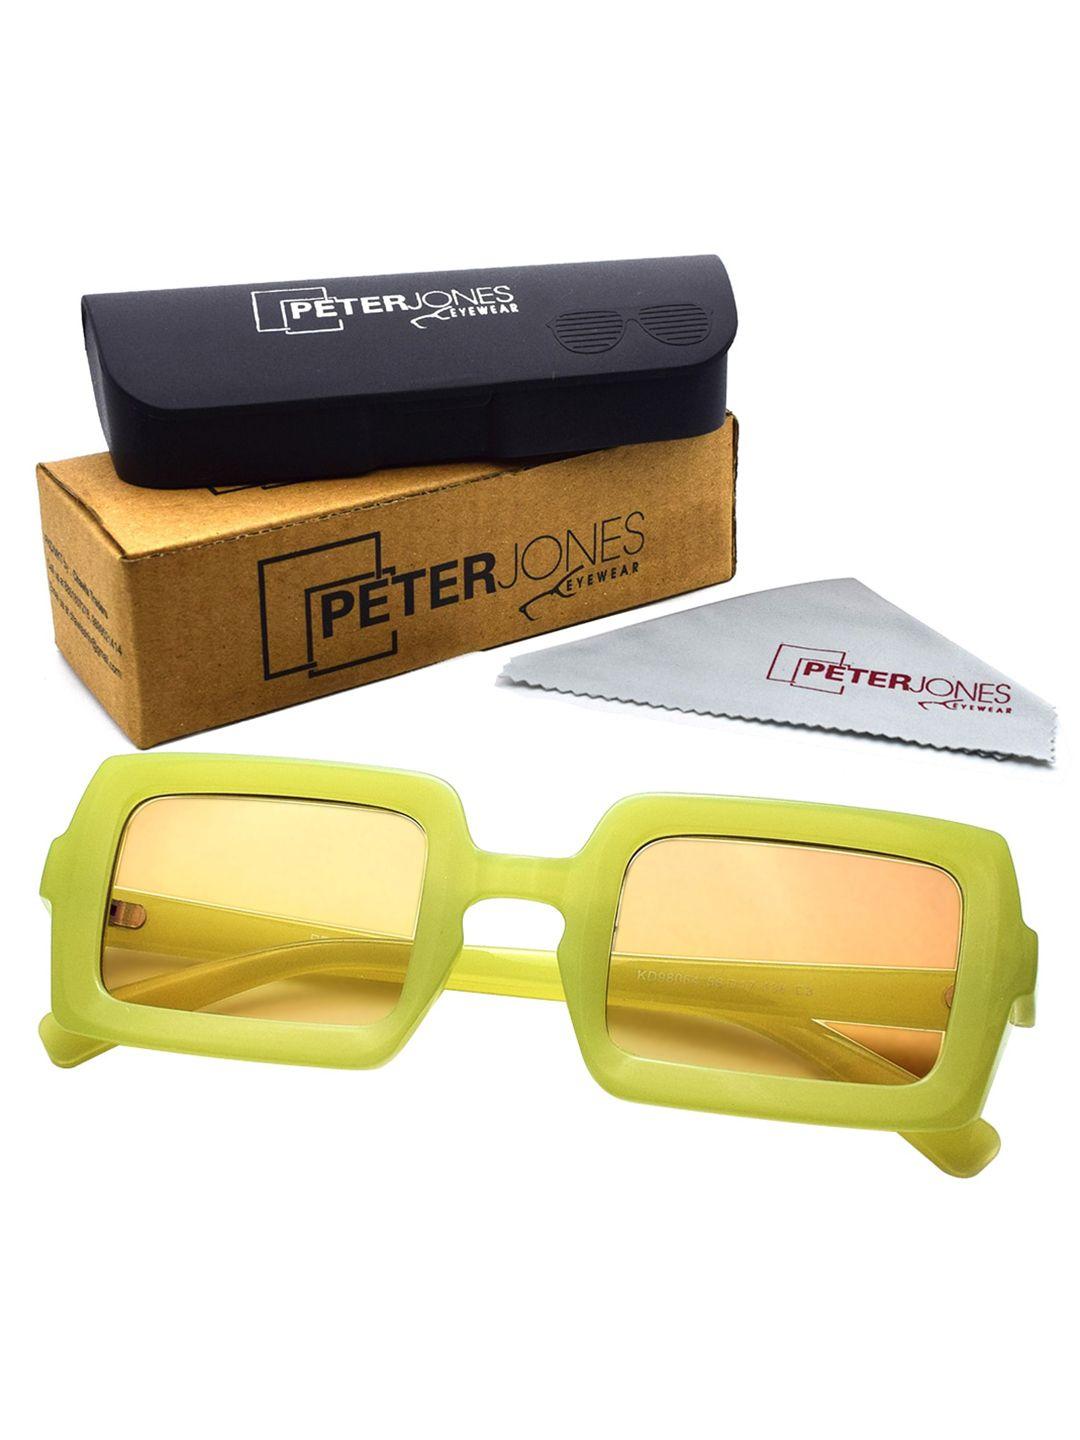 peter jones eyewear unisex square sunglasses with polarised lens